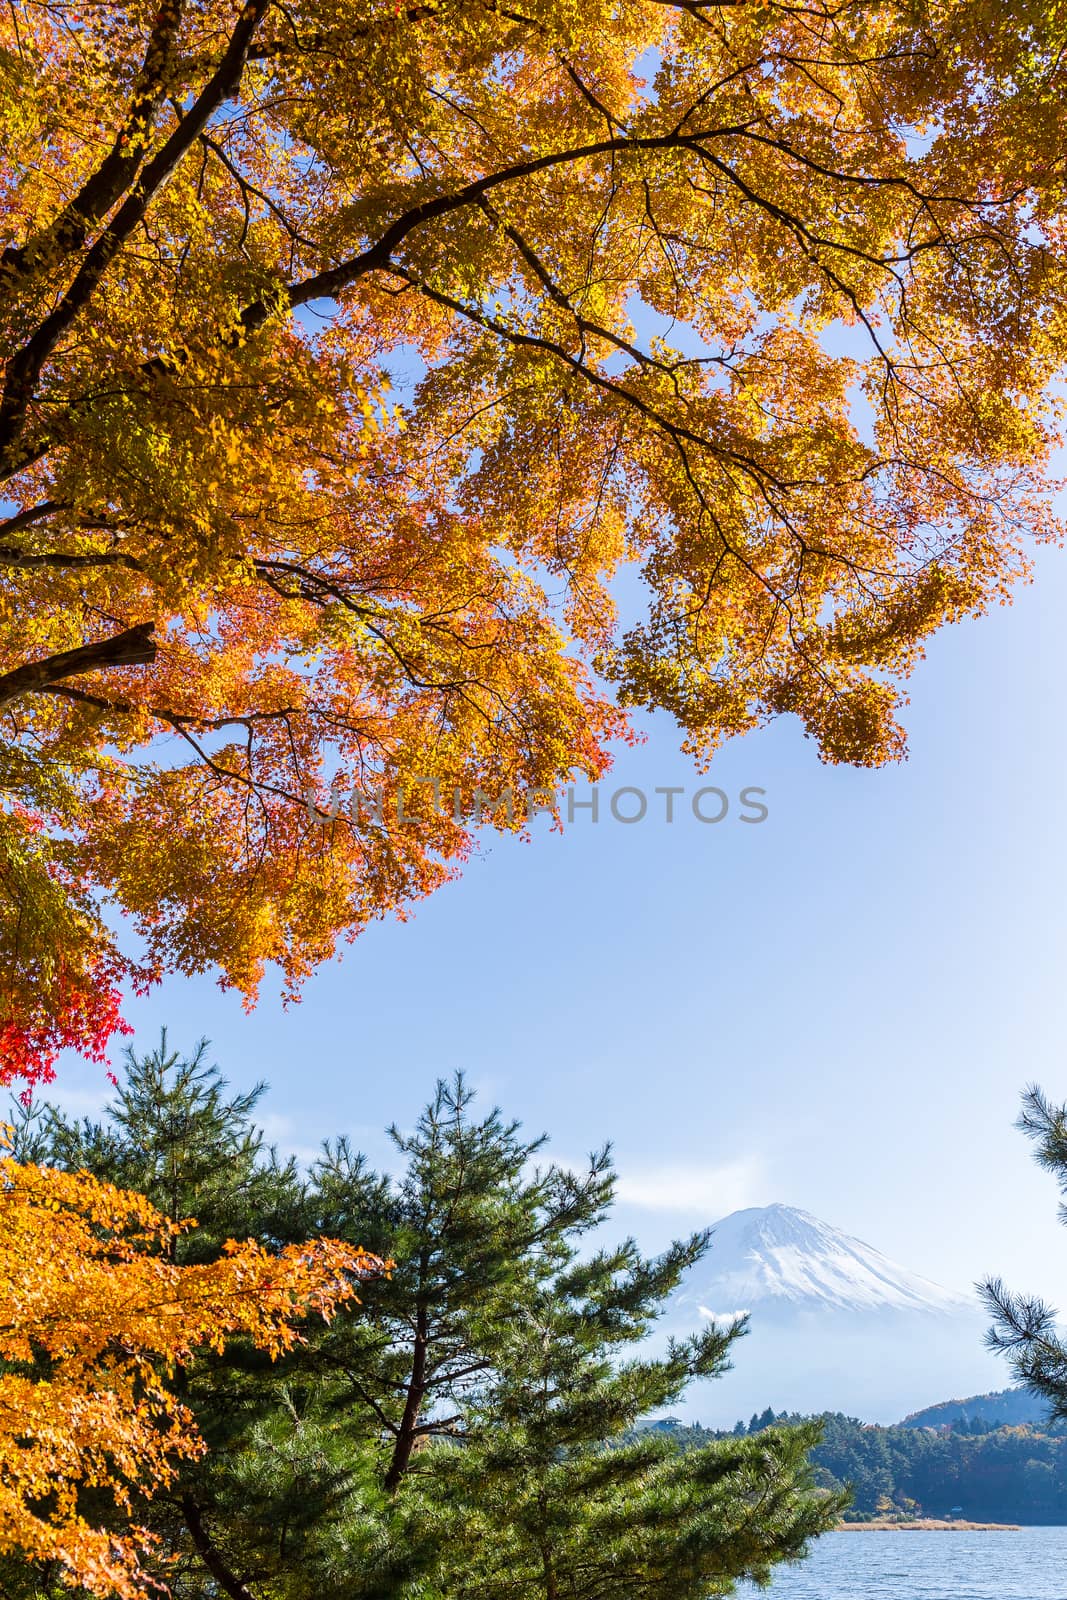 Mt.Fuji in autumn by leungchopan